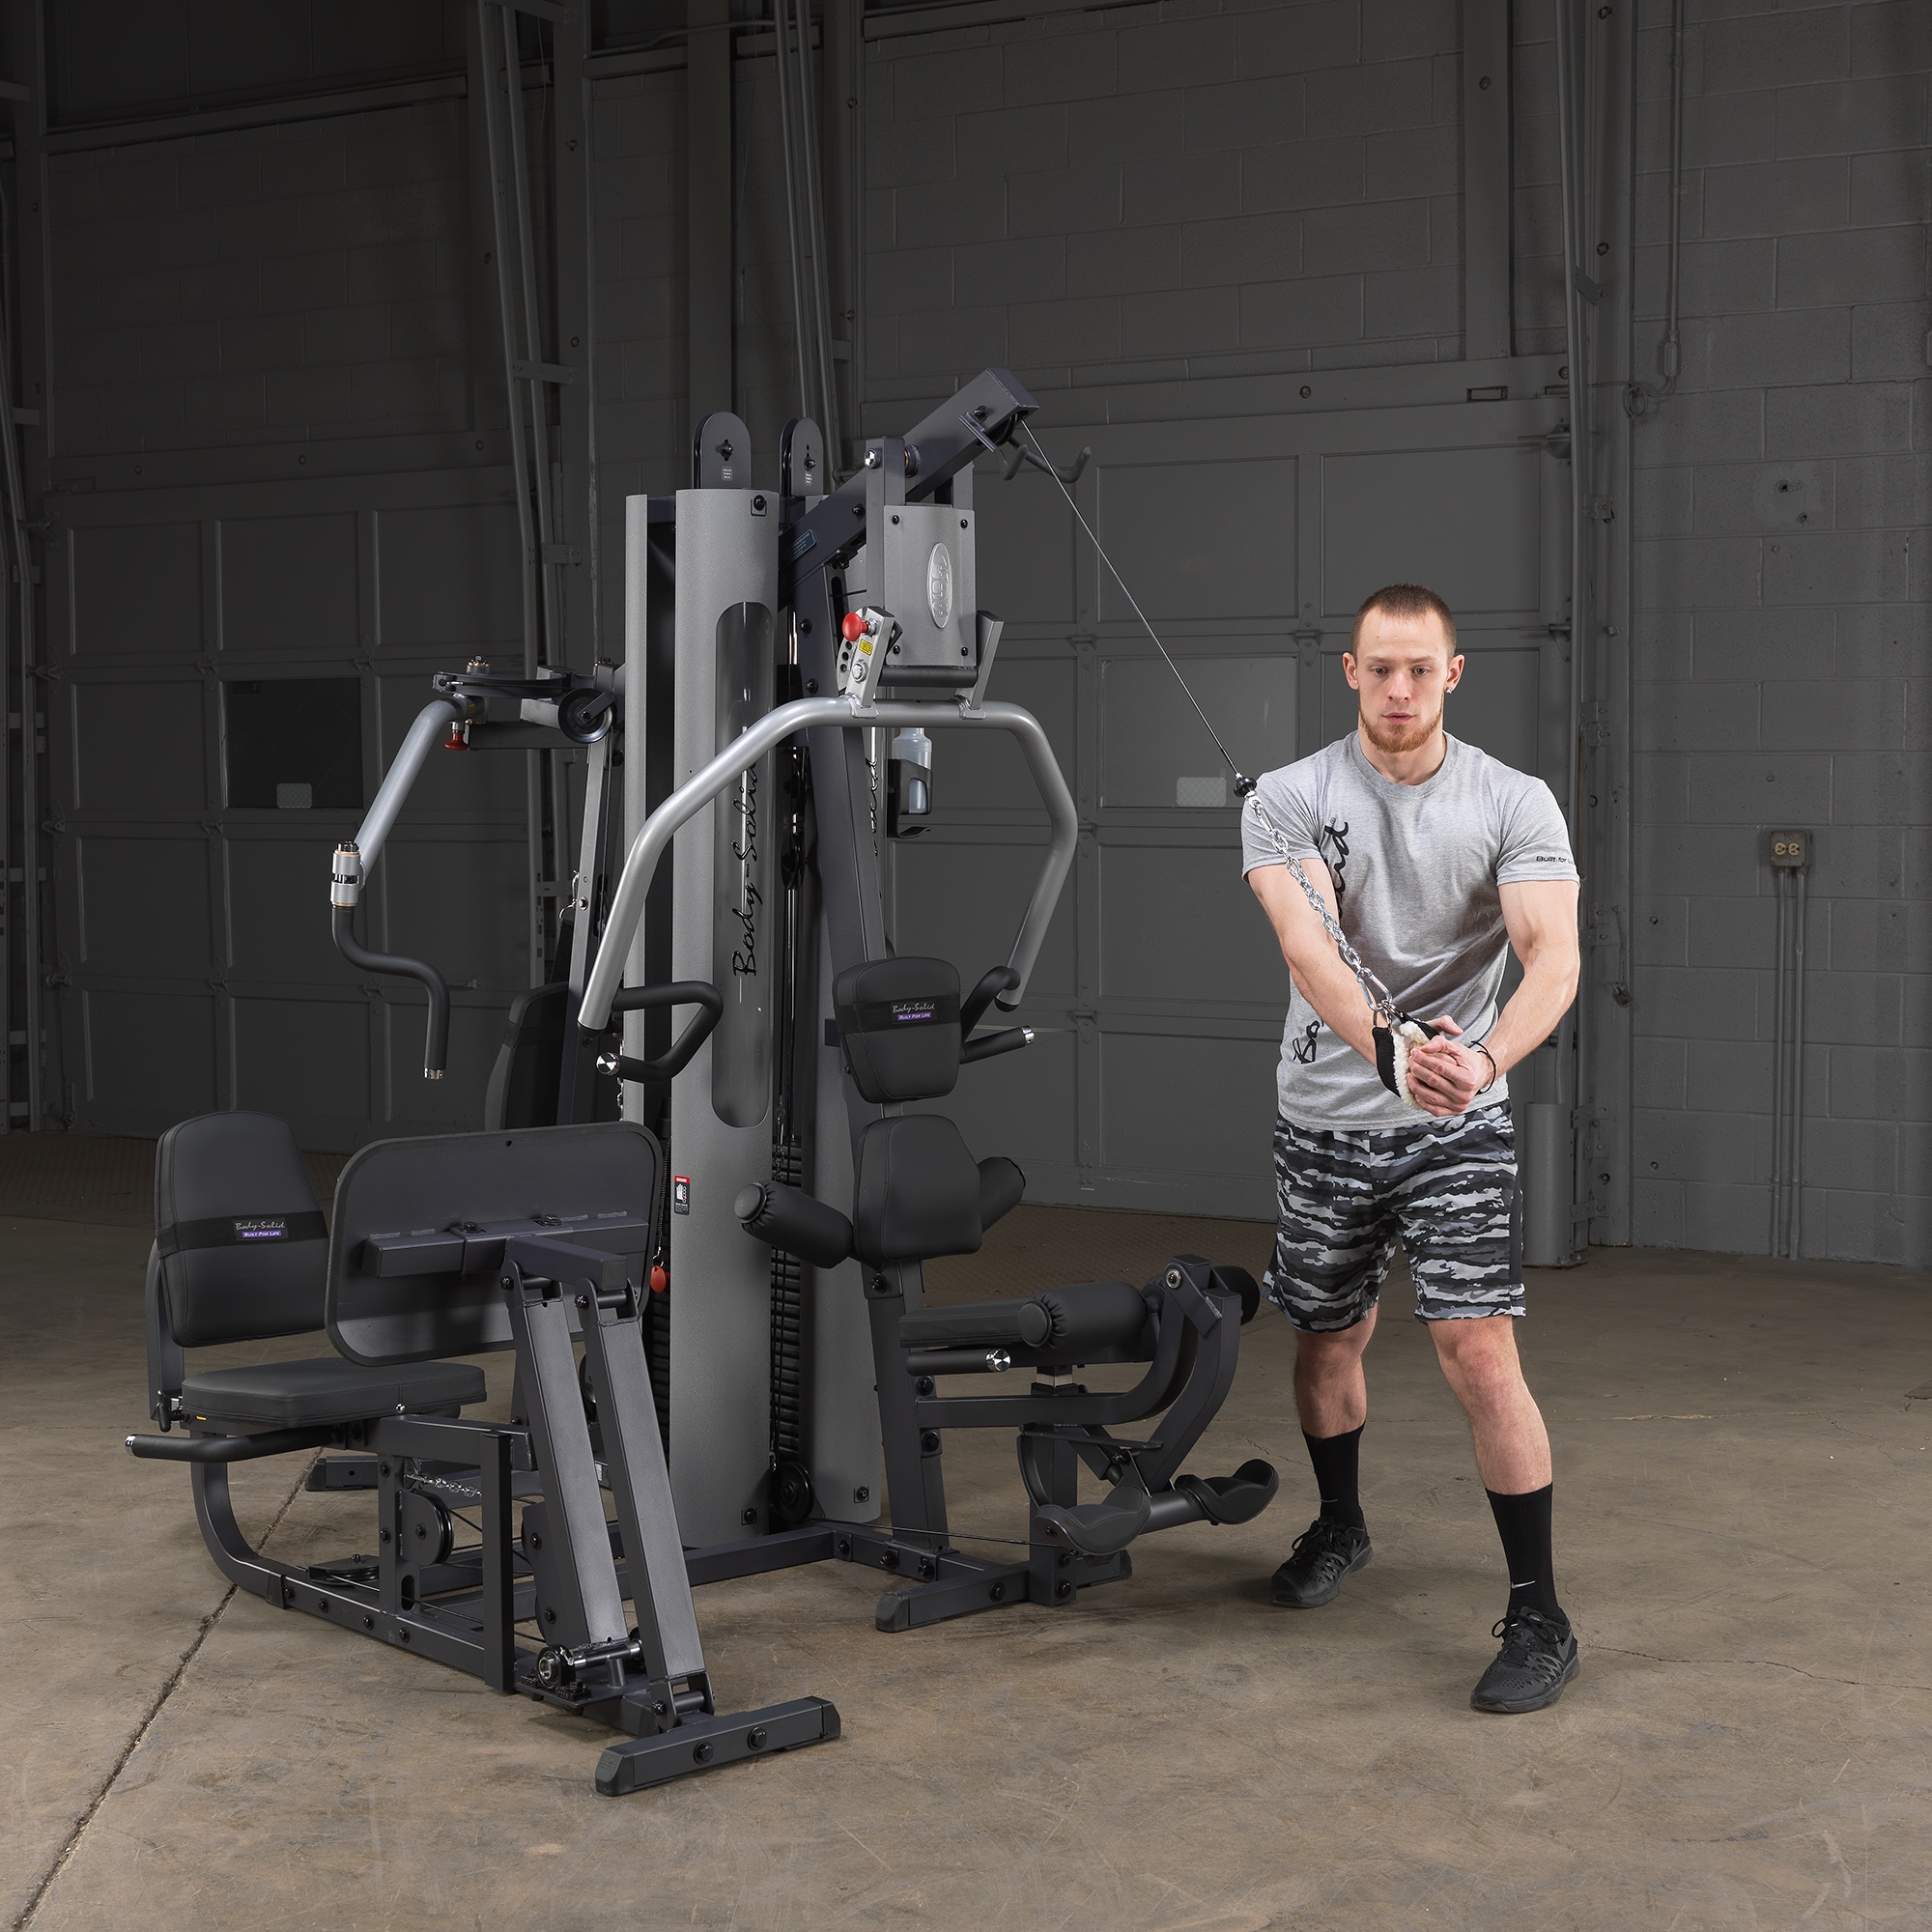 CITYSPORTS ชุดโฮมยิม body-solid G9S gym อุปกรณ์ออกกำลังกาย แข็งแรงทนทาน Home Gym Machine